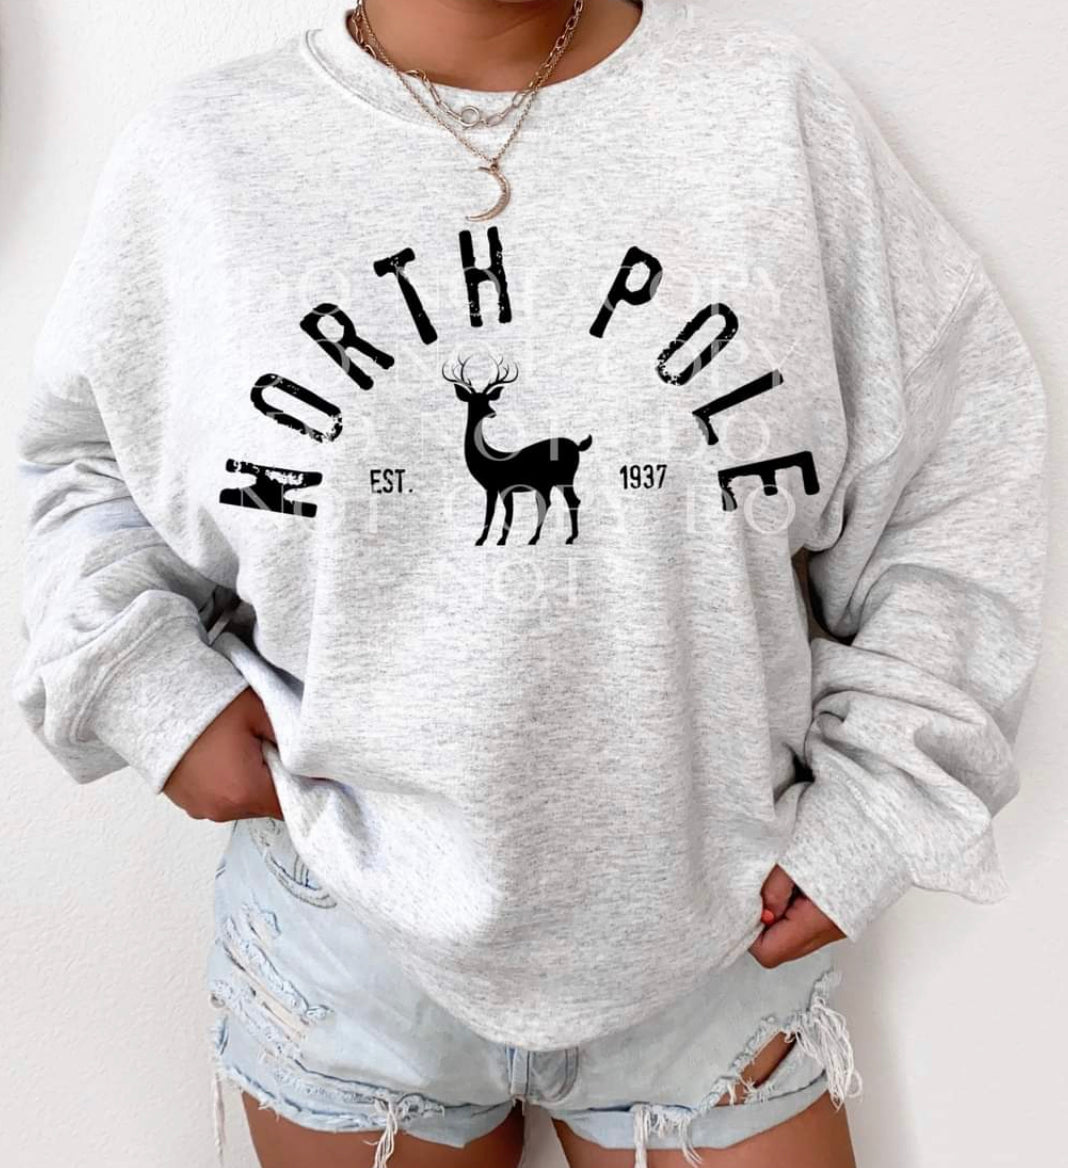 North Pole Shirt